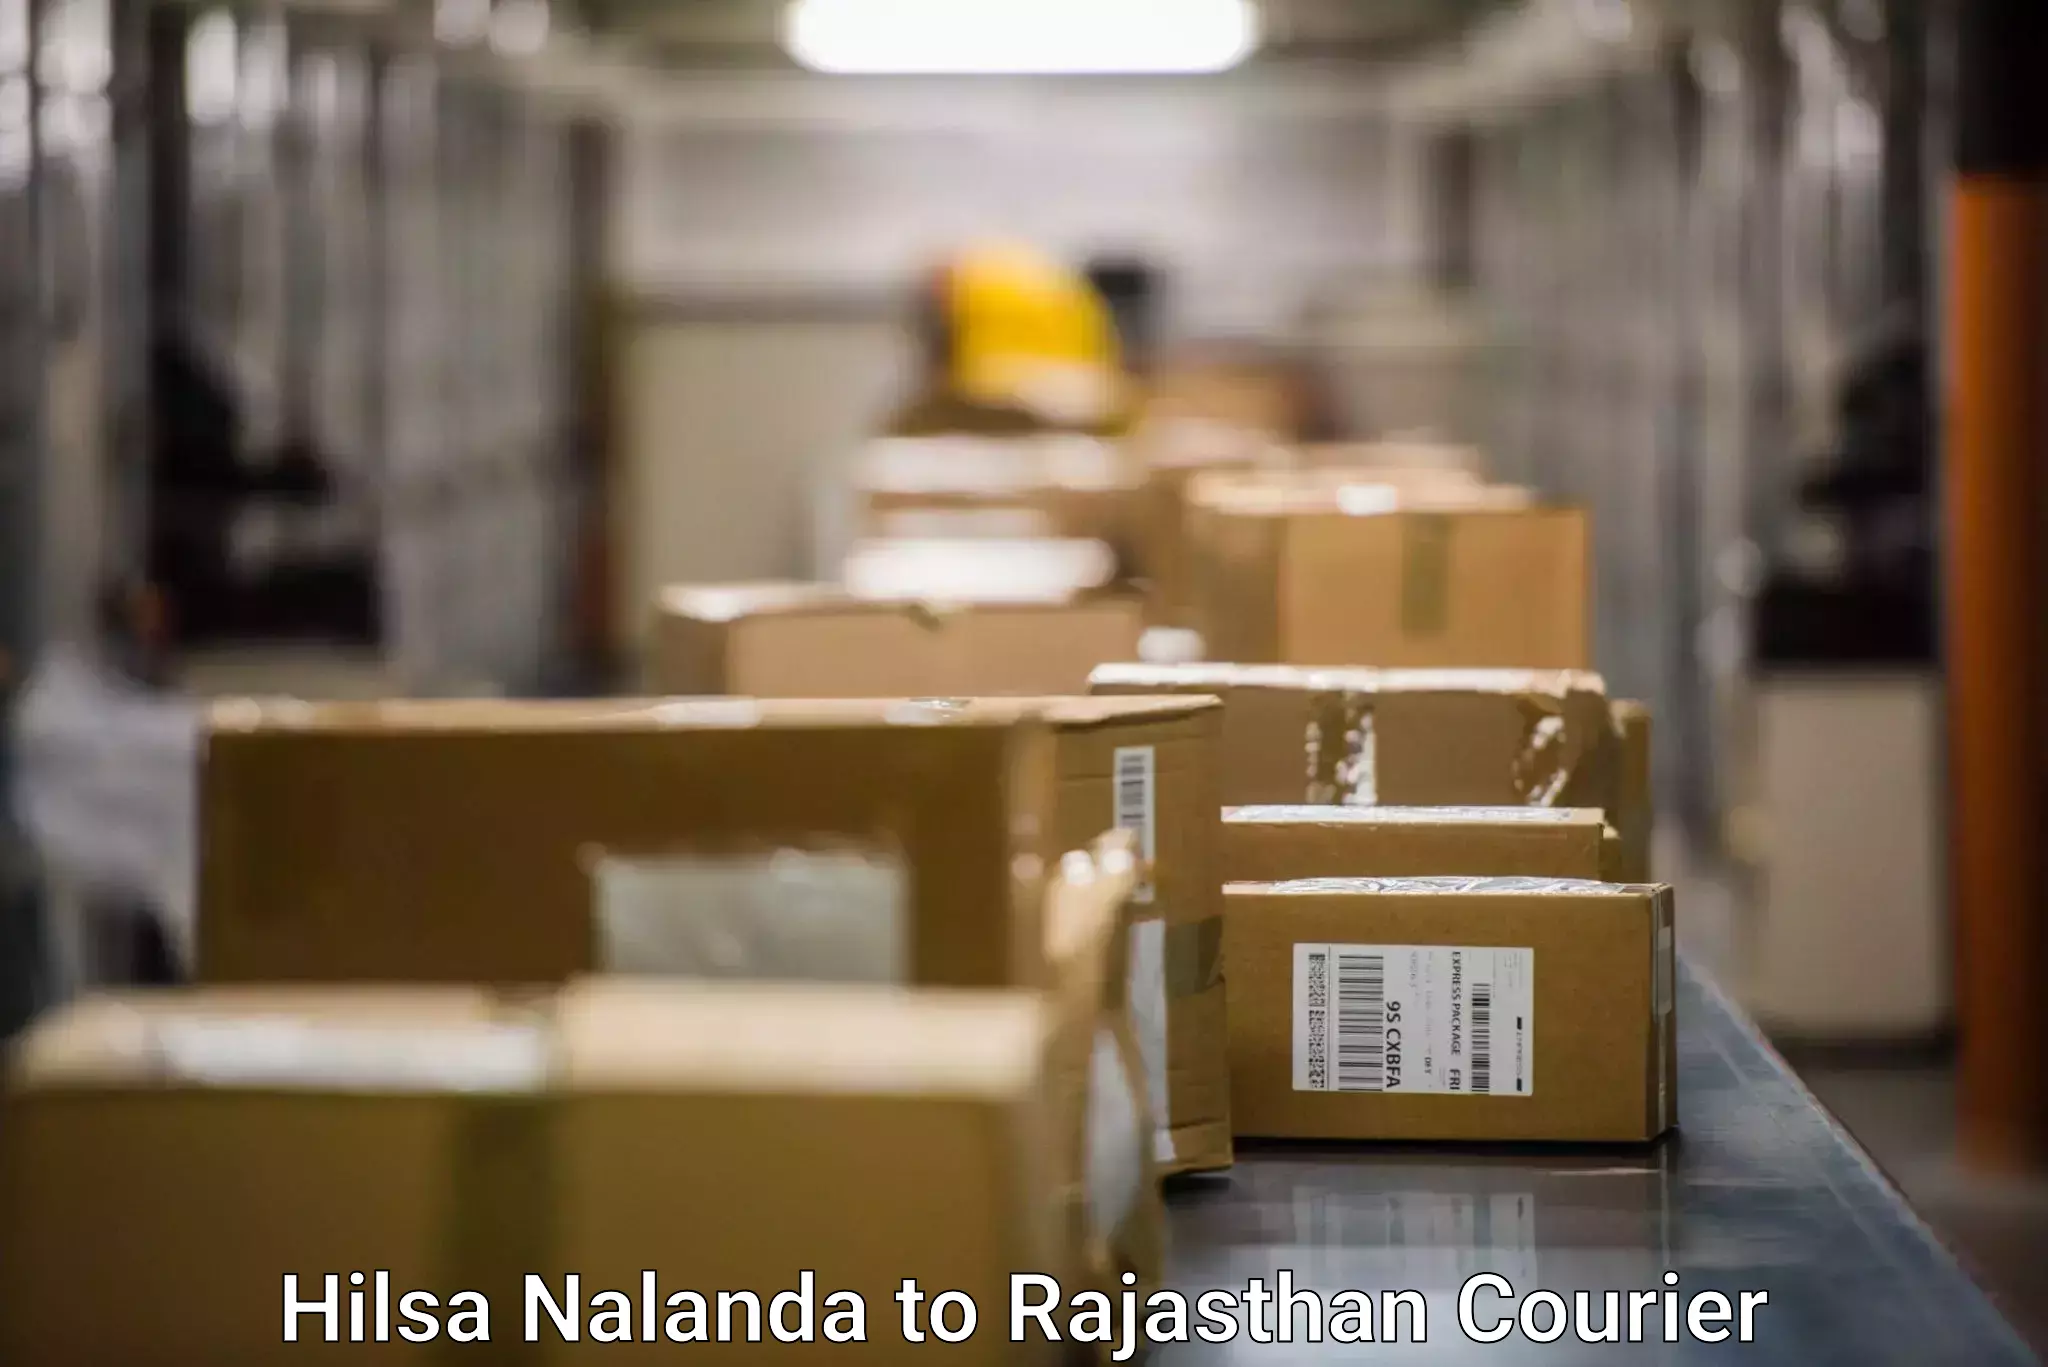 Professional courier handling Hilsa Nalanda to Kawai